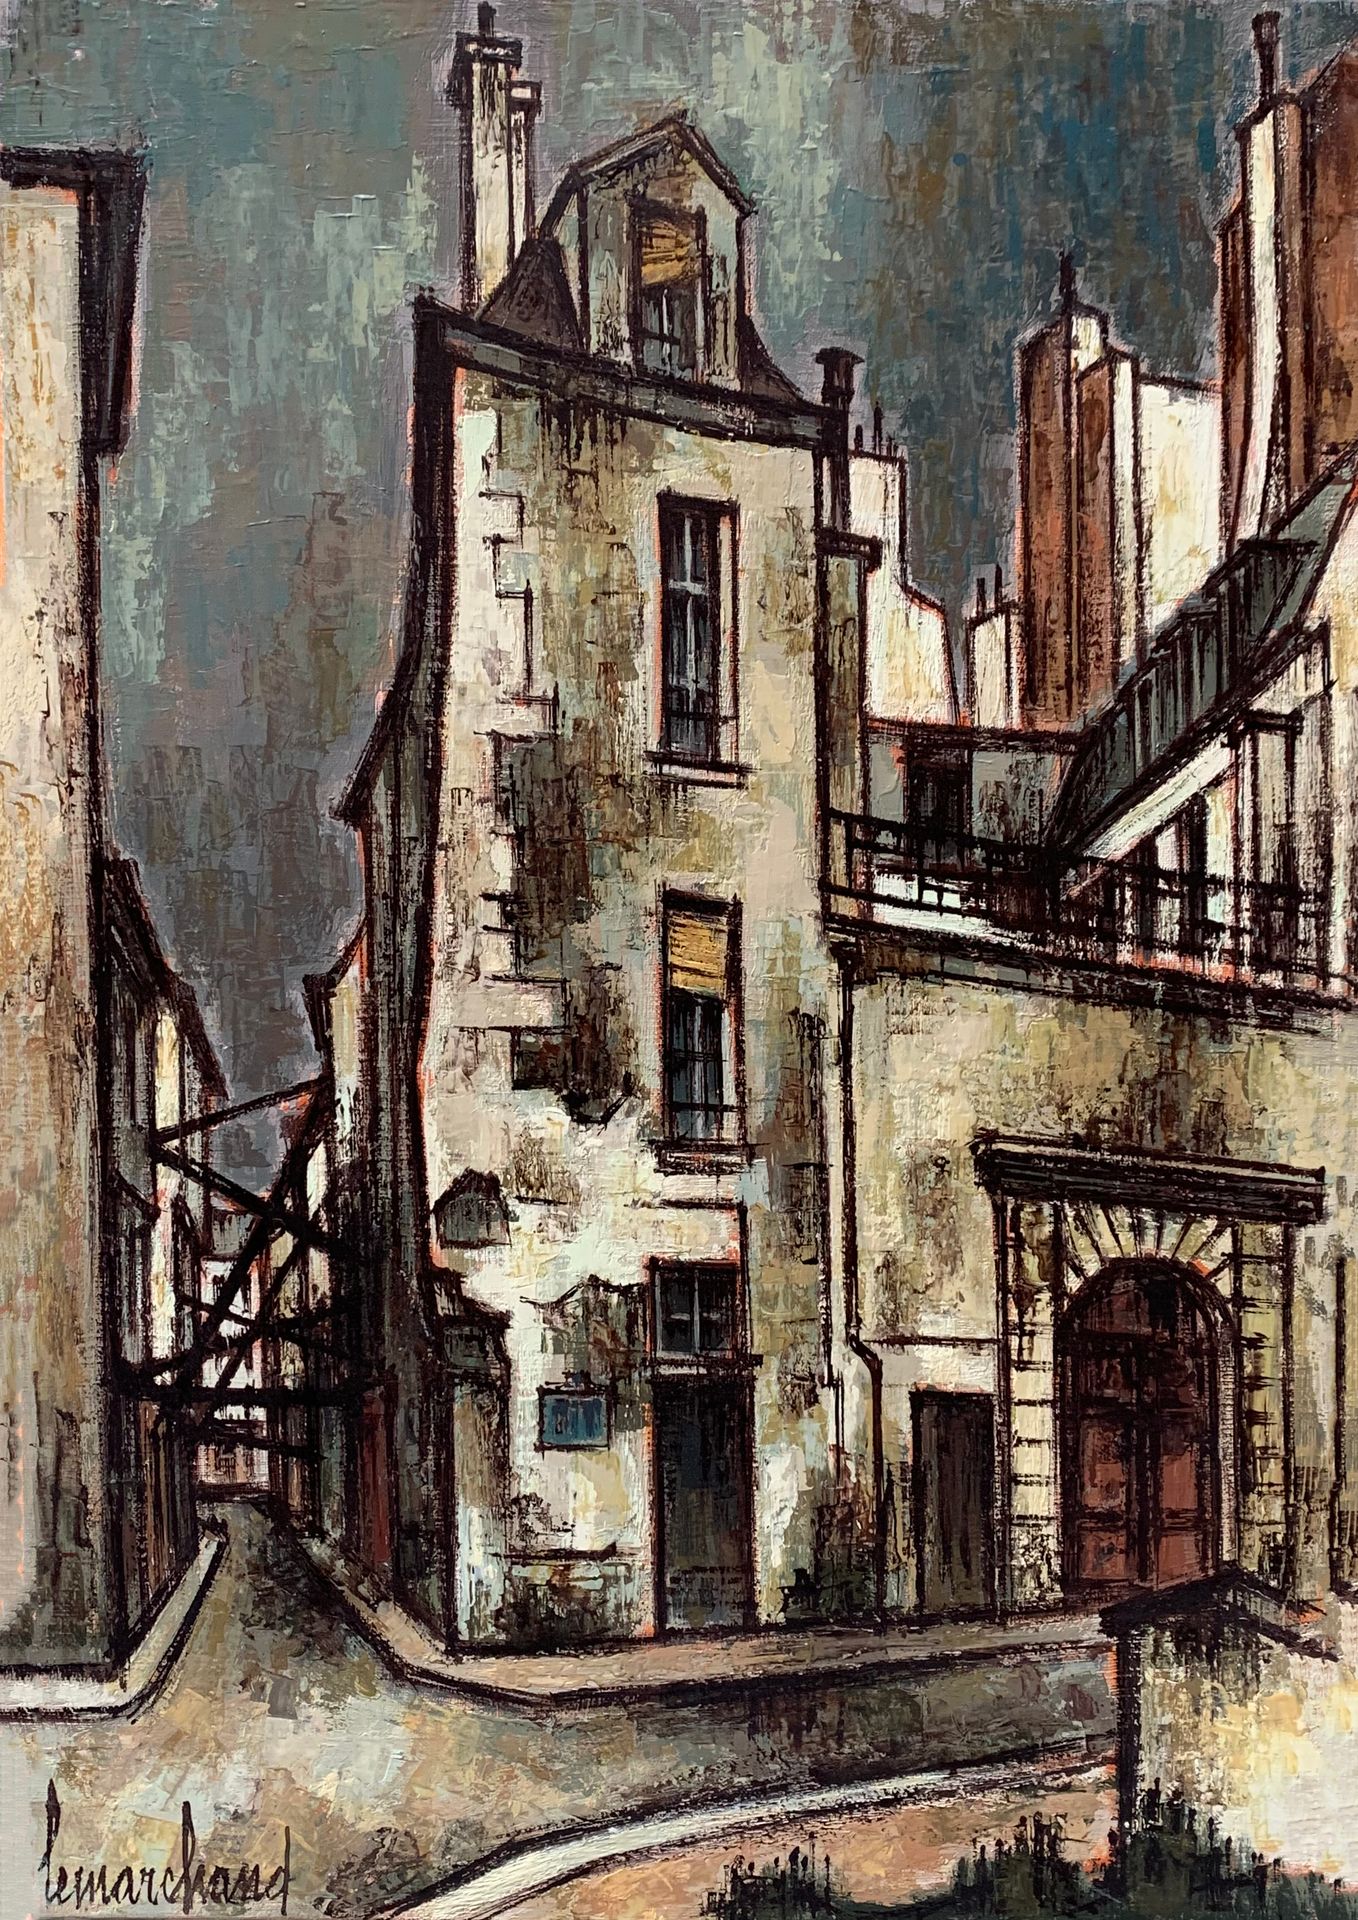 Null 皮埃尔-莱马赫德 (1906-1970)

查理曼大街

布面油画，左下角有签名，背面画框上有标题

55 x 38厘米。